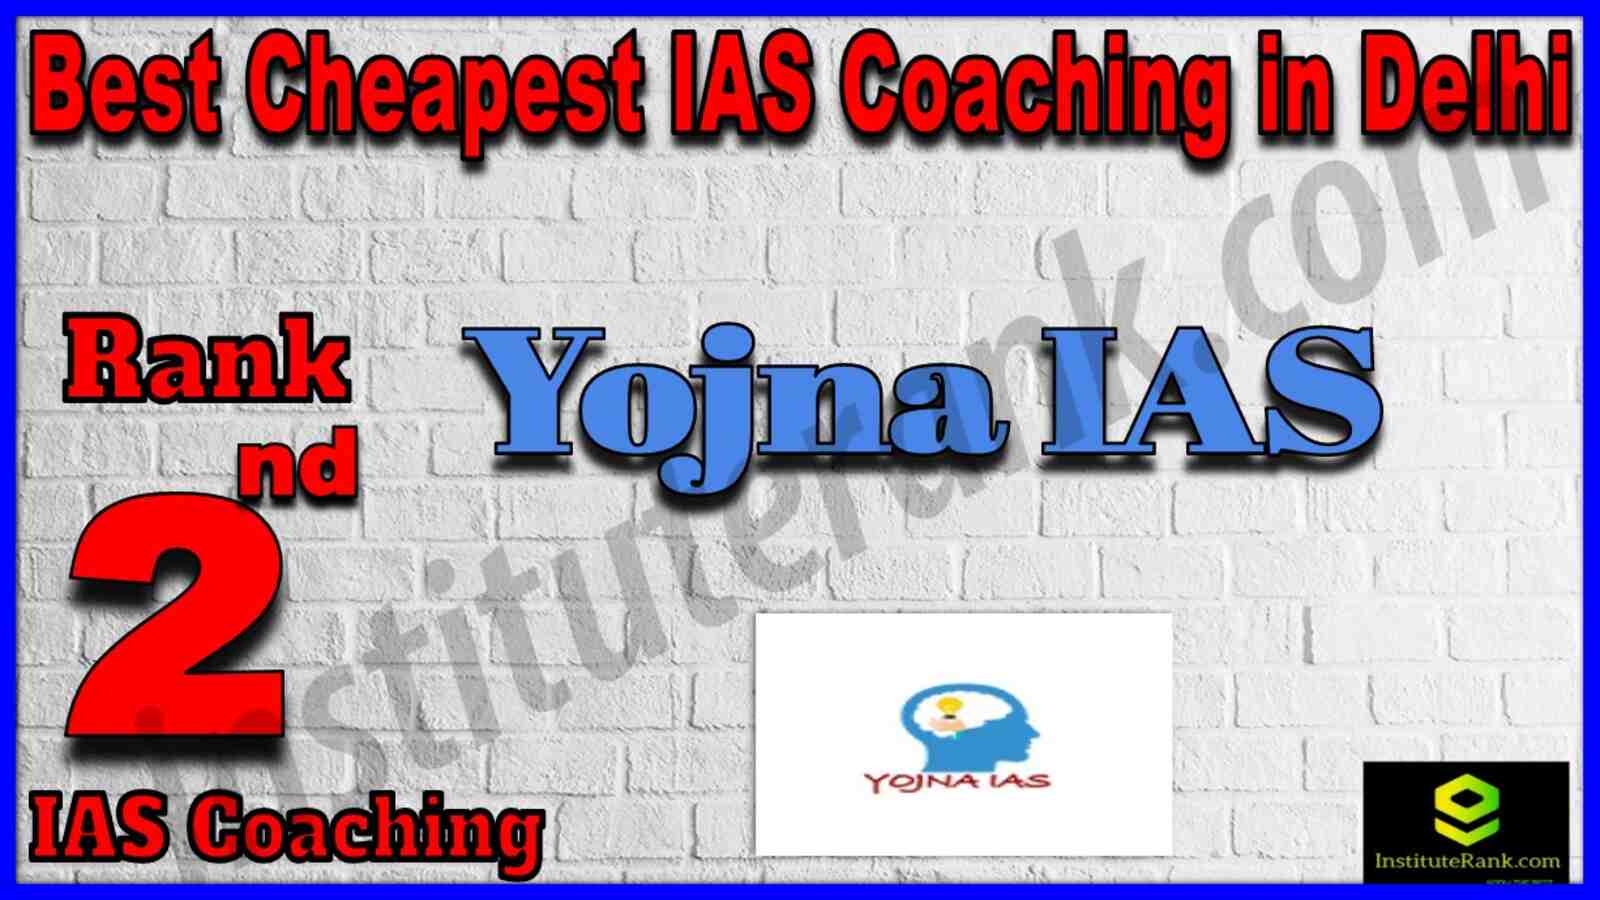 Rank 2 Best Cheapest IAS Coaching in Delhi